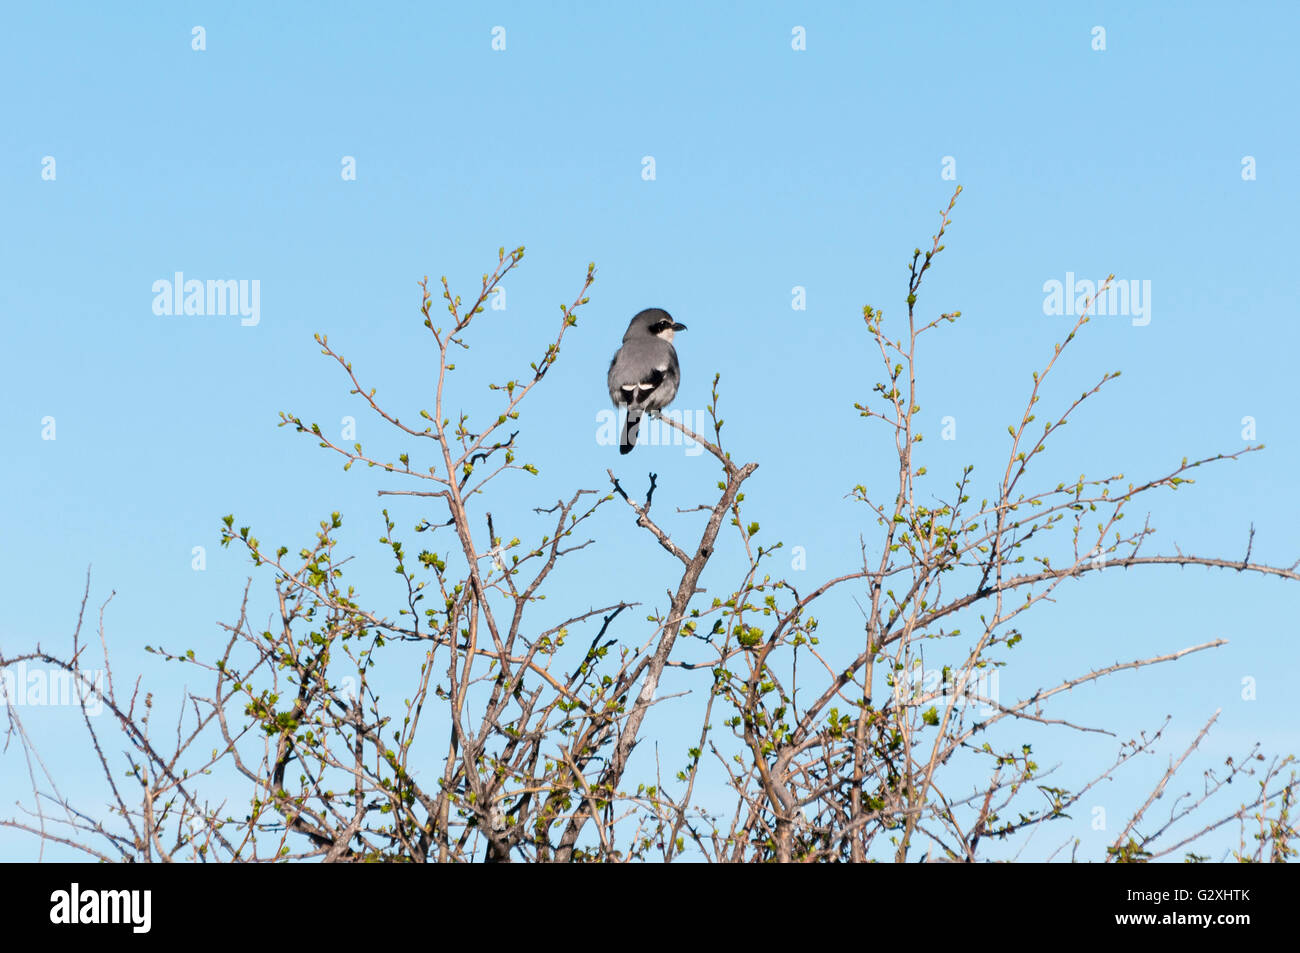 Southern Grey Shrike, Lanius meridionalis, perched on a branch. Photo taken in Colmenar Viejo, Madrid, Spain Stock Photo